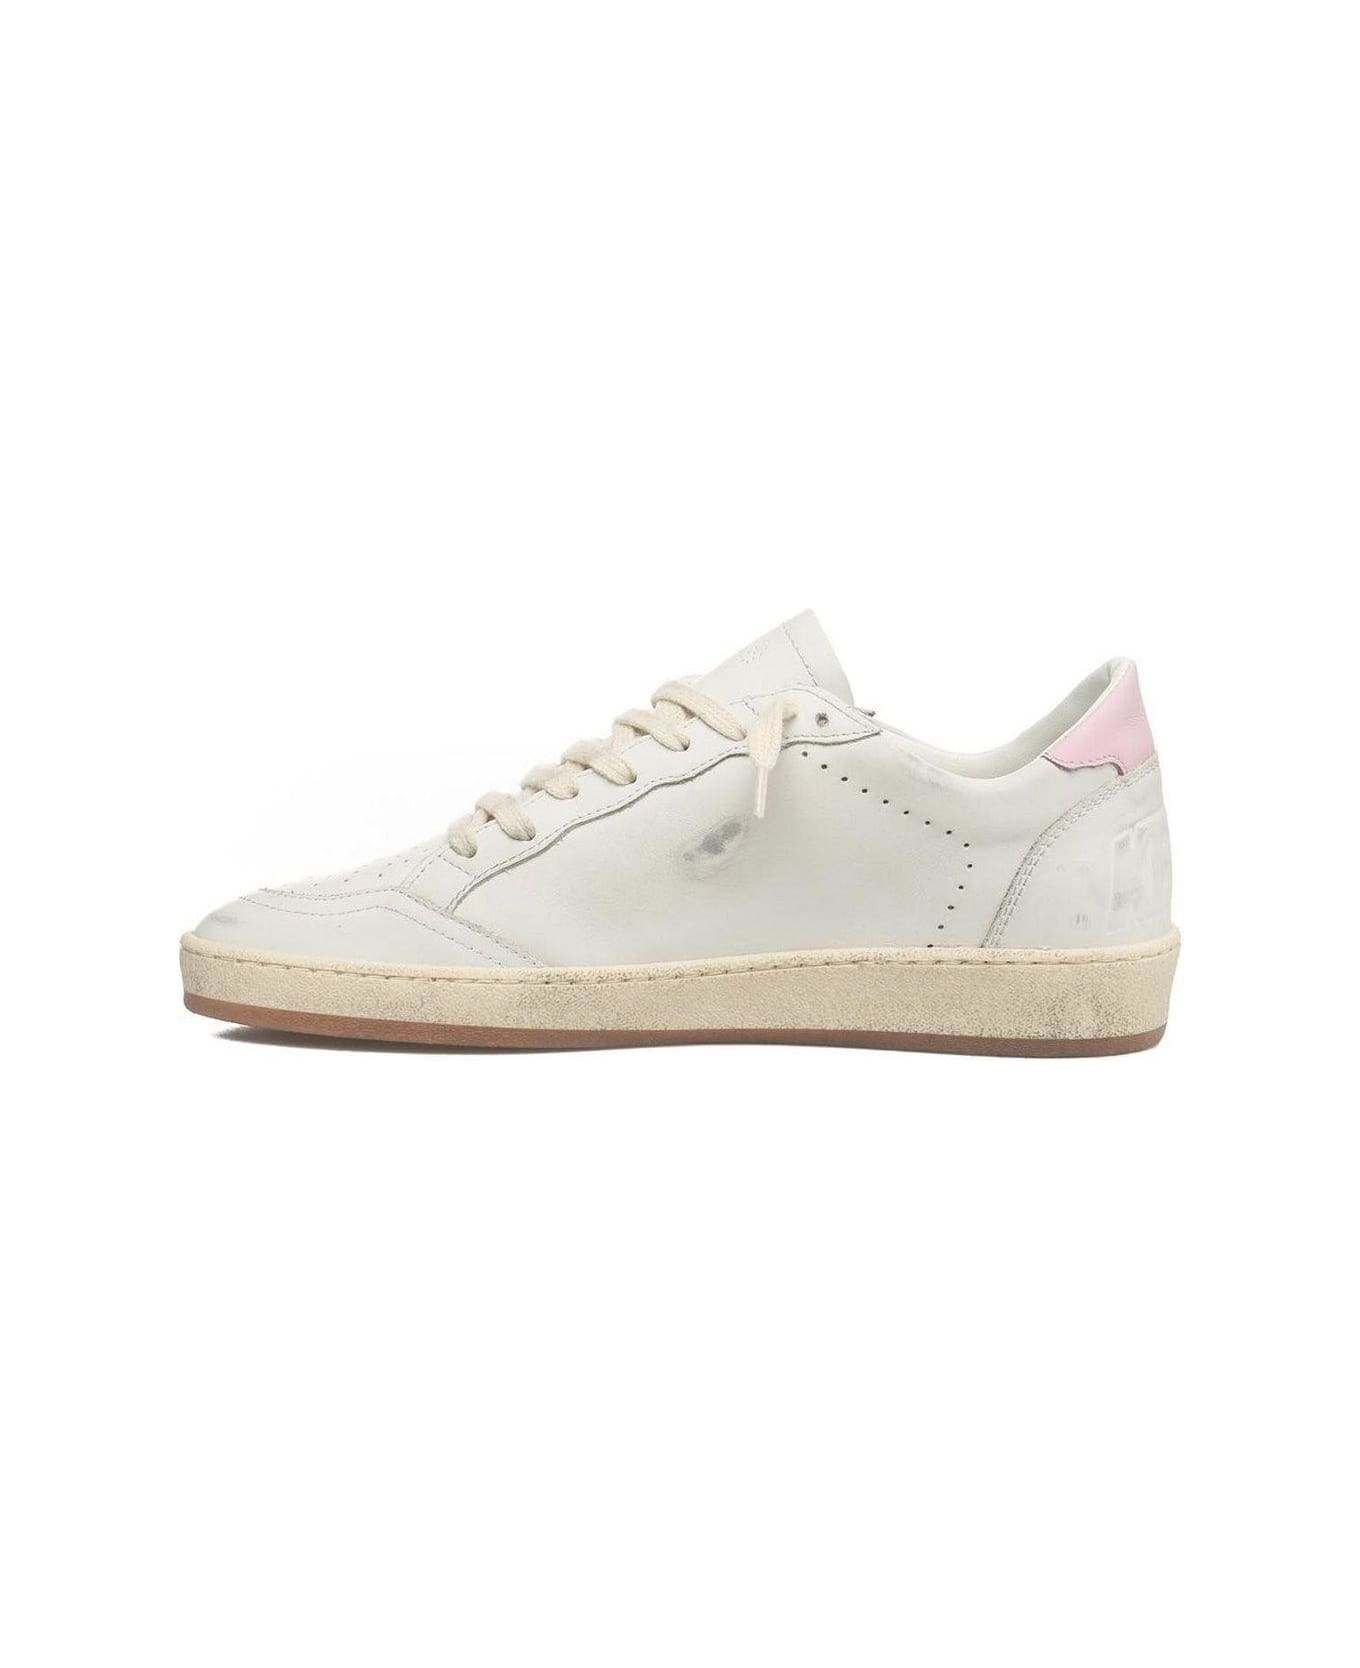 Golden Goose Ball Star Sneakers - White-platinum-pink